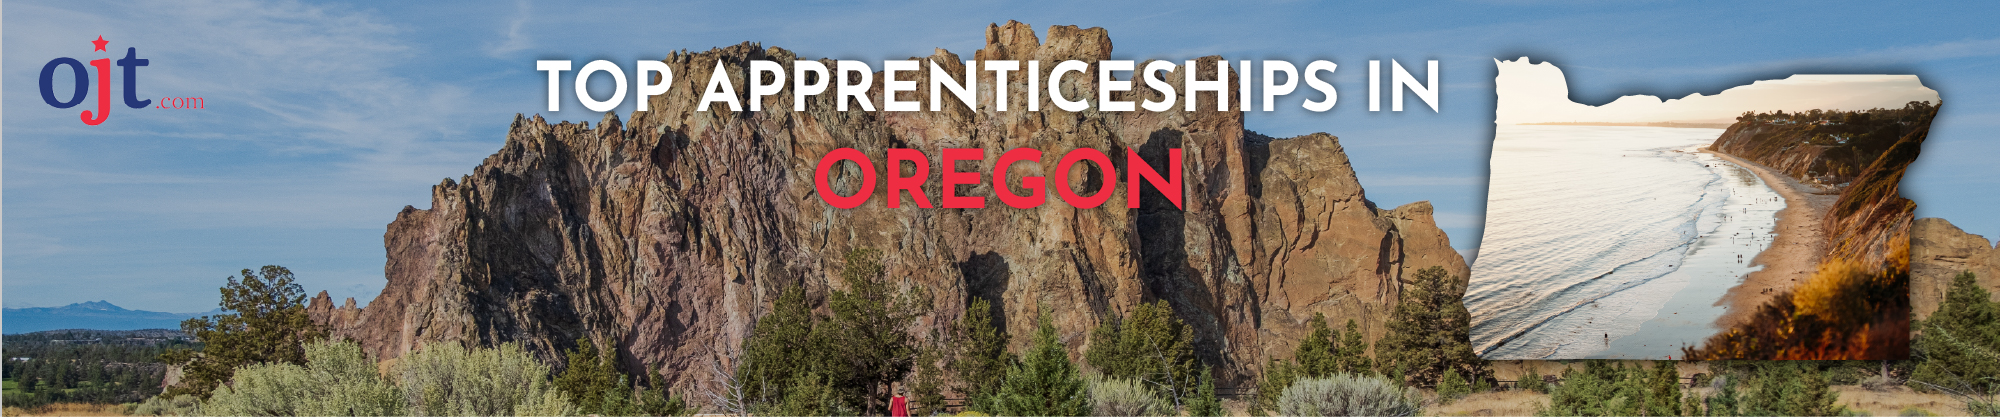 OJT Top Apprenticeships in Oregon